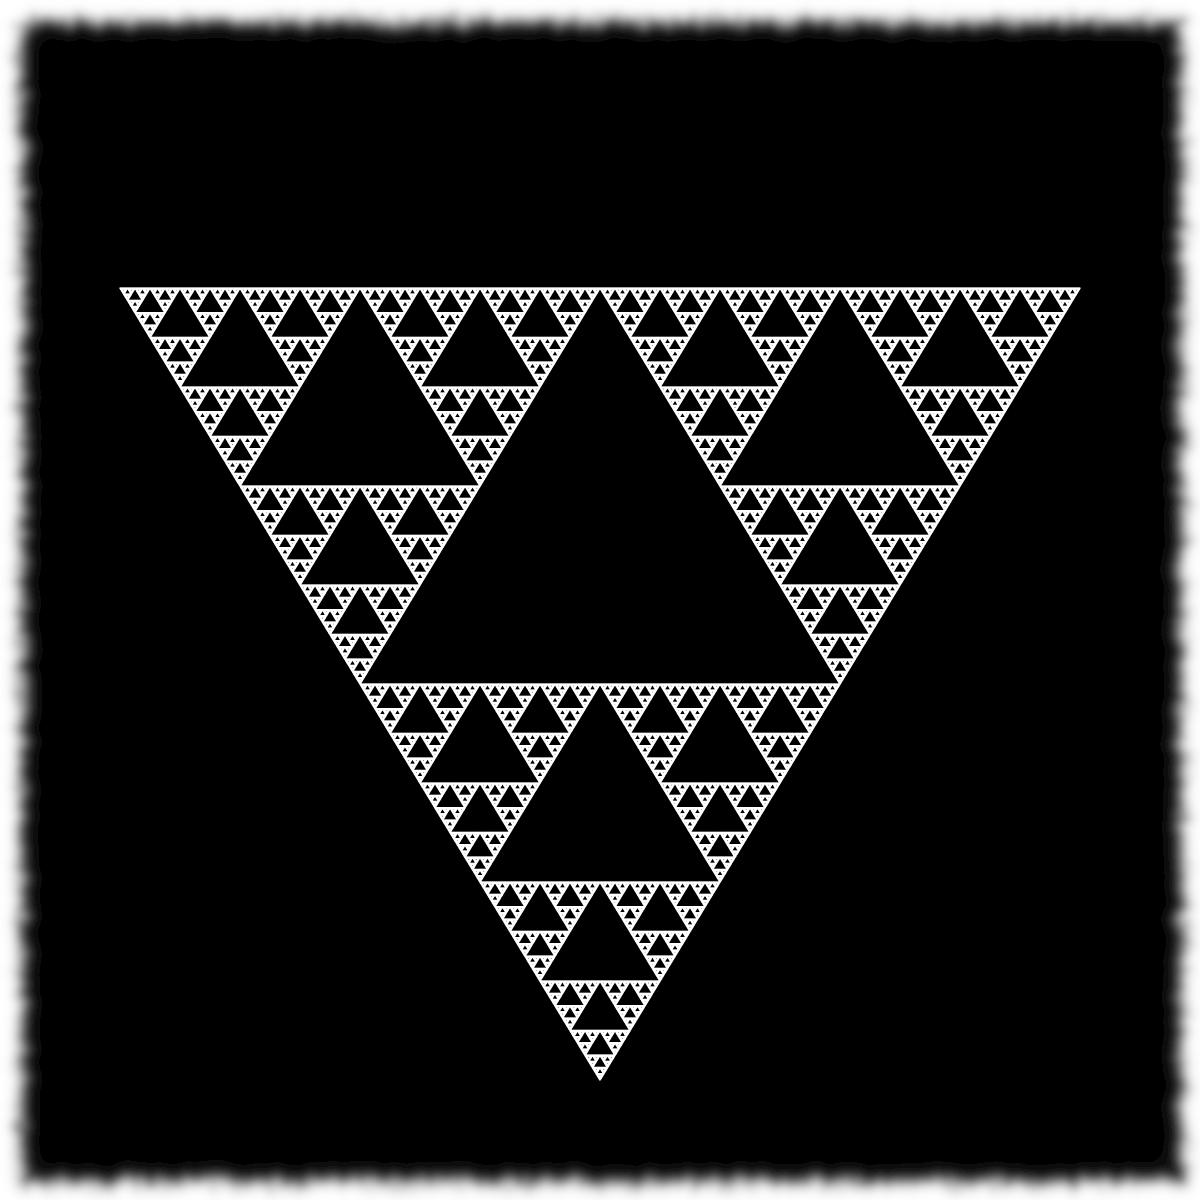 Black triangular fractal